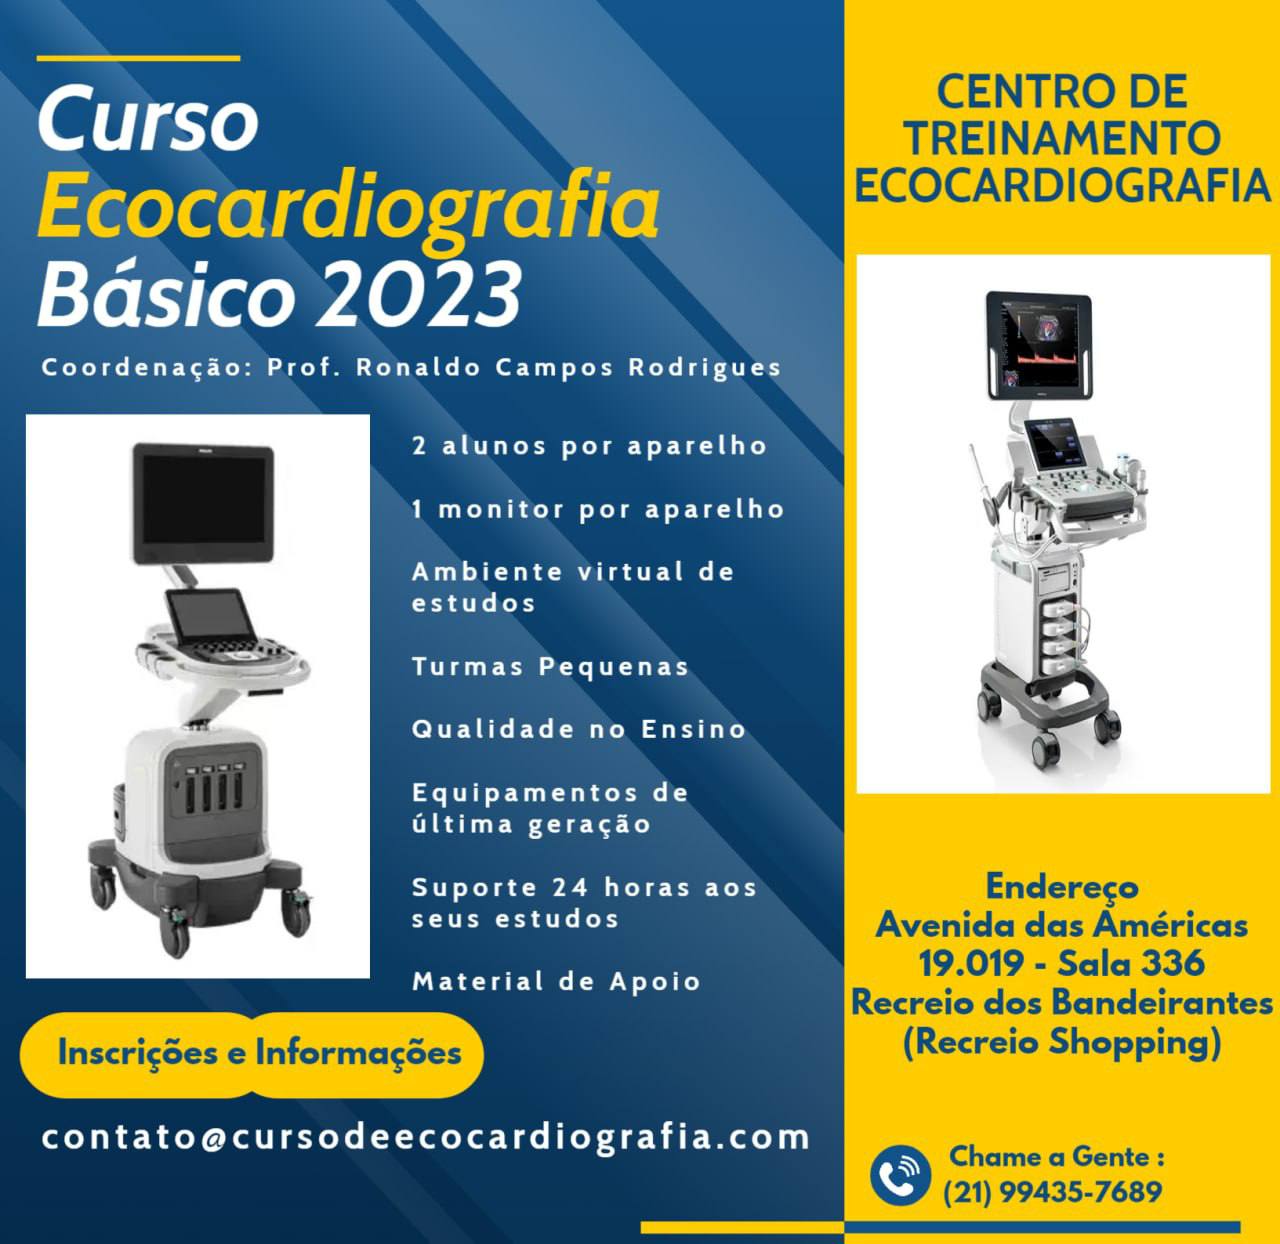 CURSO DE ECOCARDIOGRAFIA MÓDULO BÁSICO 2023